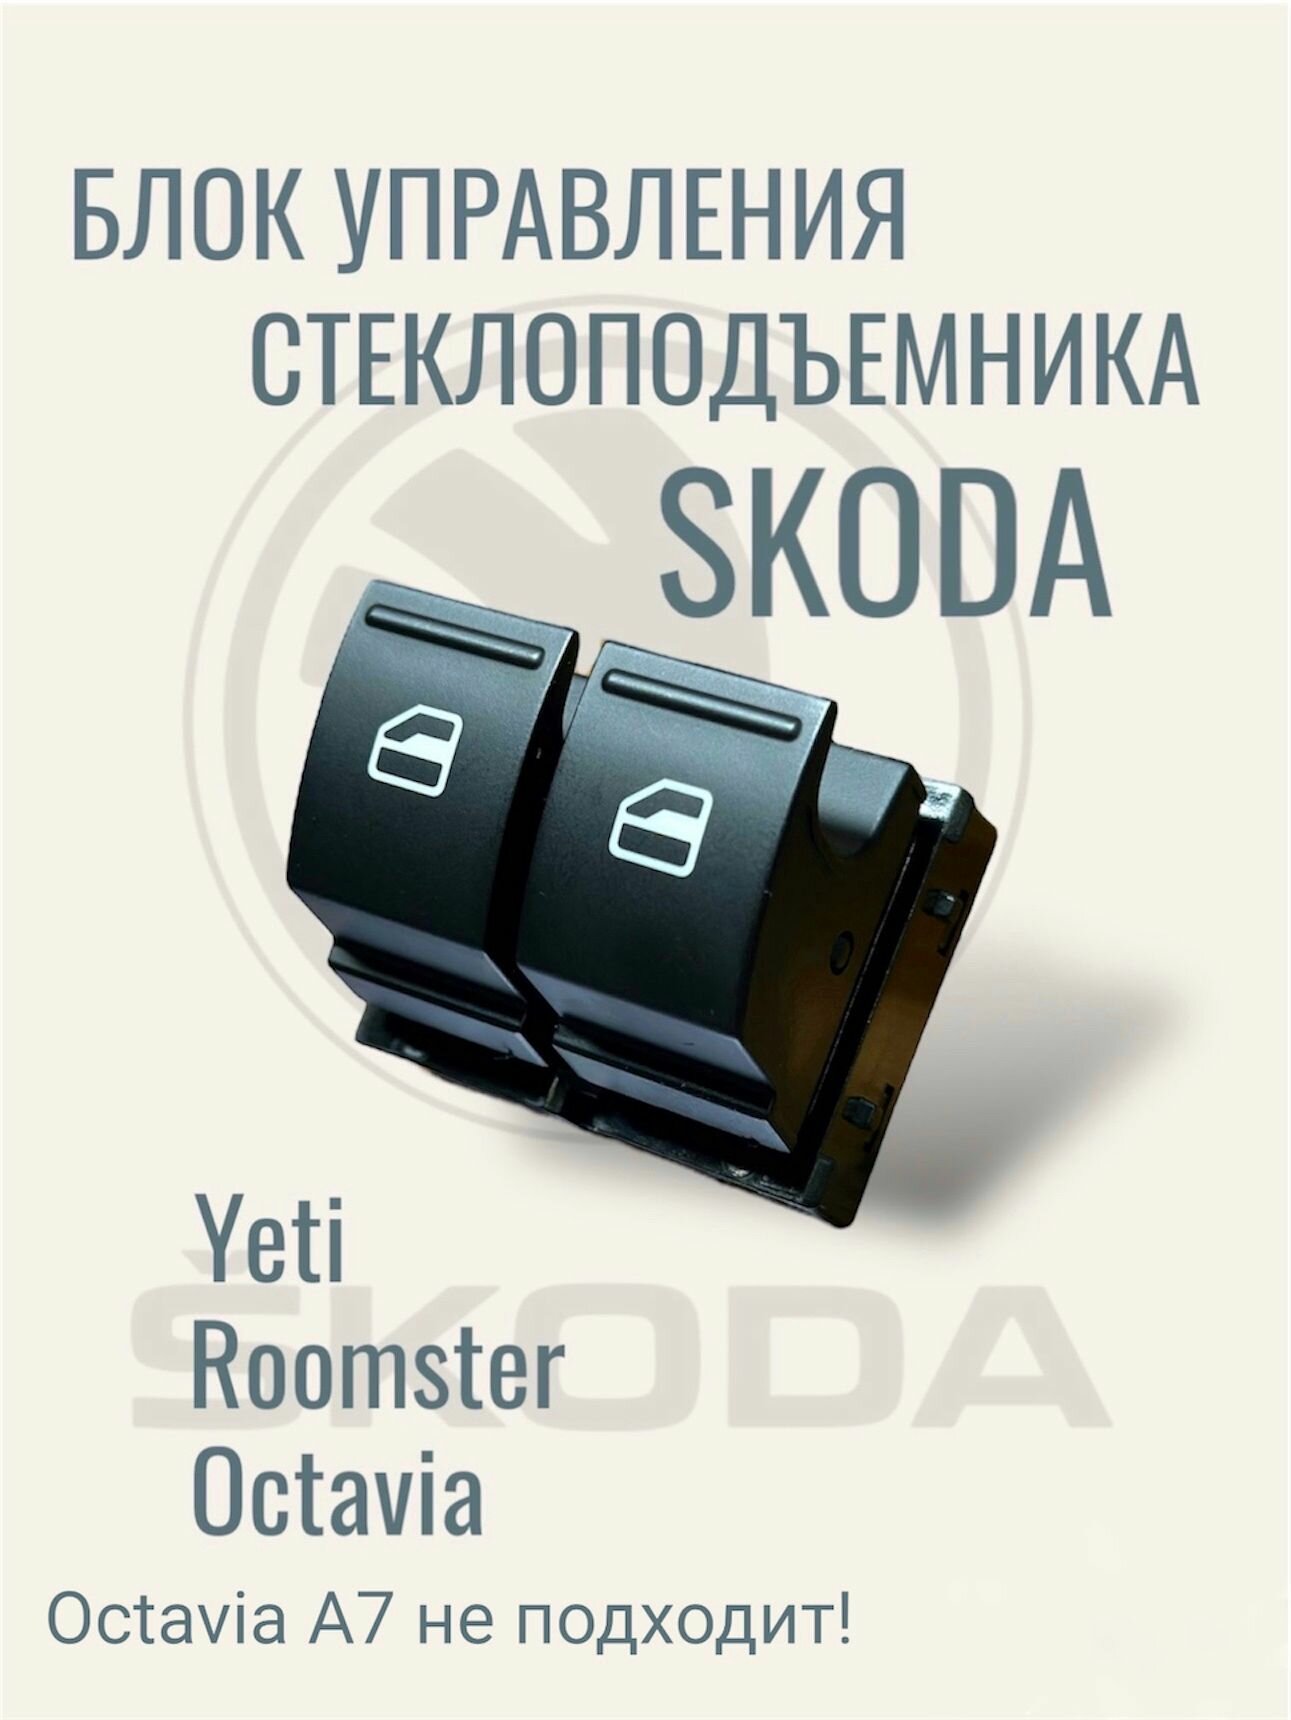 Блок стеклоподъемника Skoda Octavia Yeti Roomster